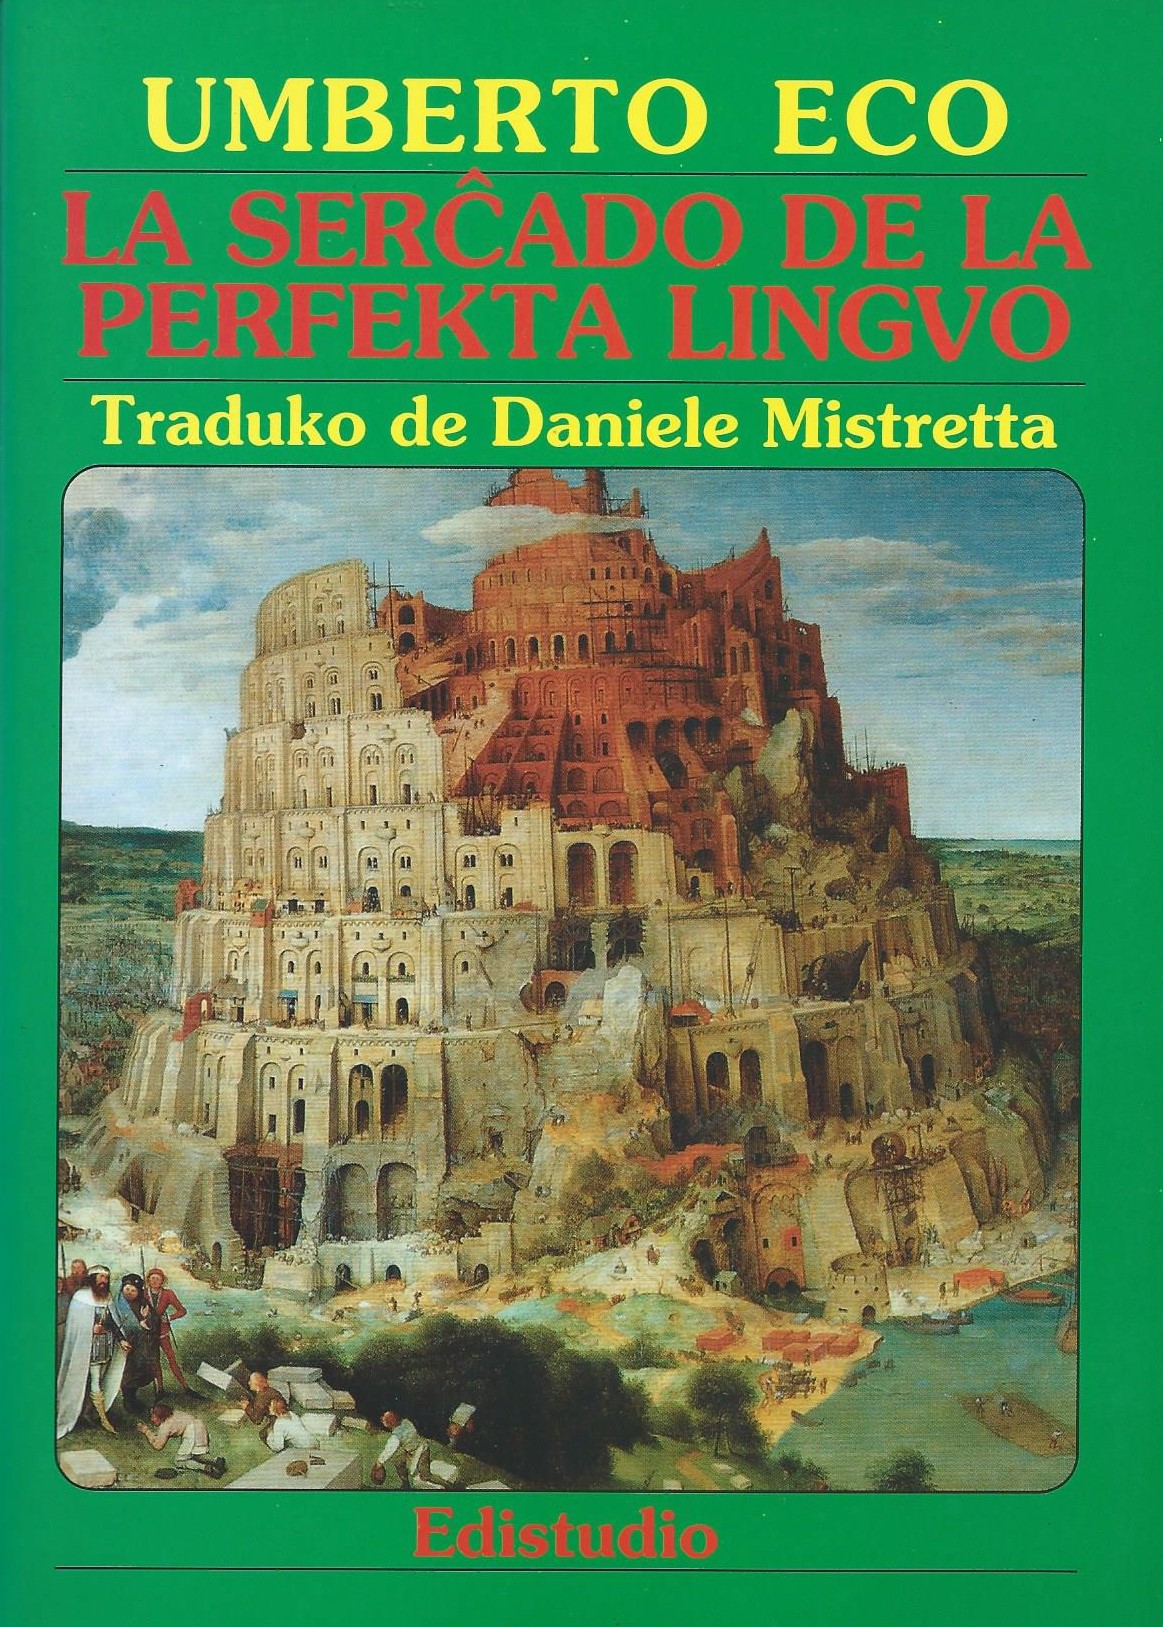 Wikipedia, 1994 book covers, Book covers in Esperanto, PD ineligible, Umberto Eco